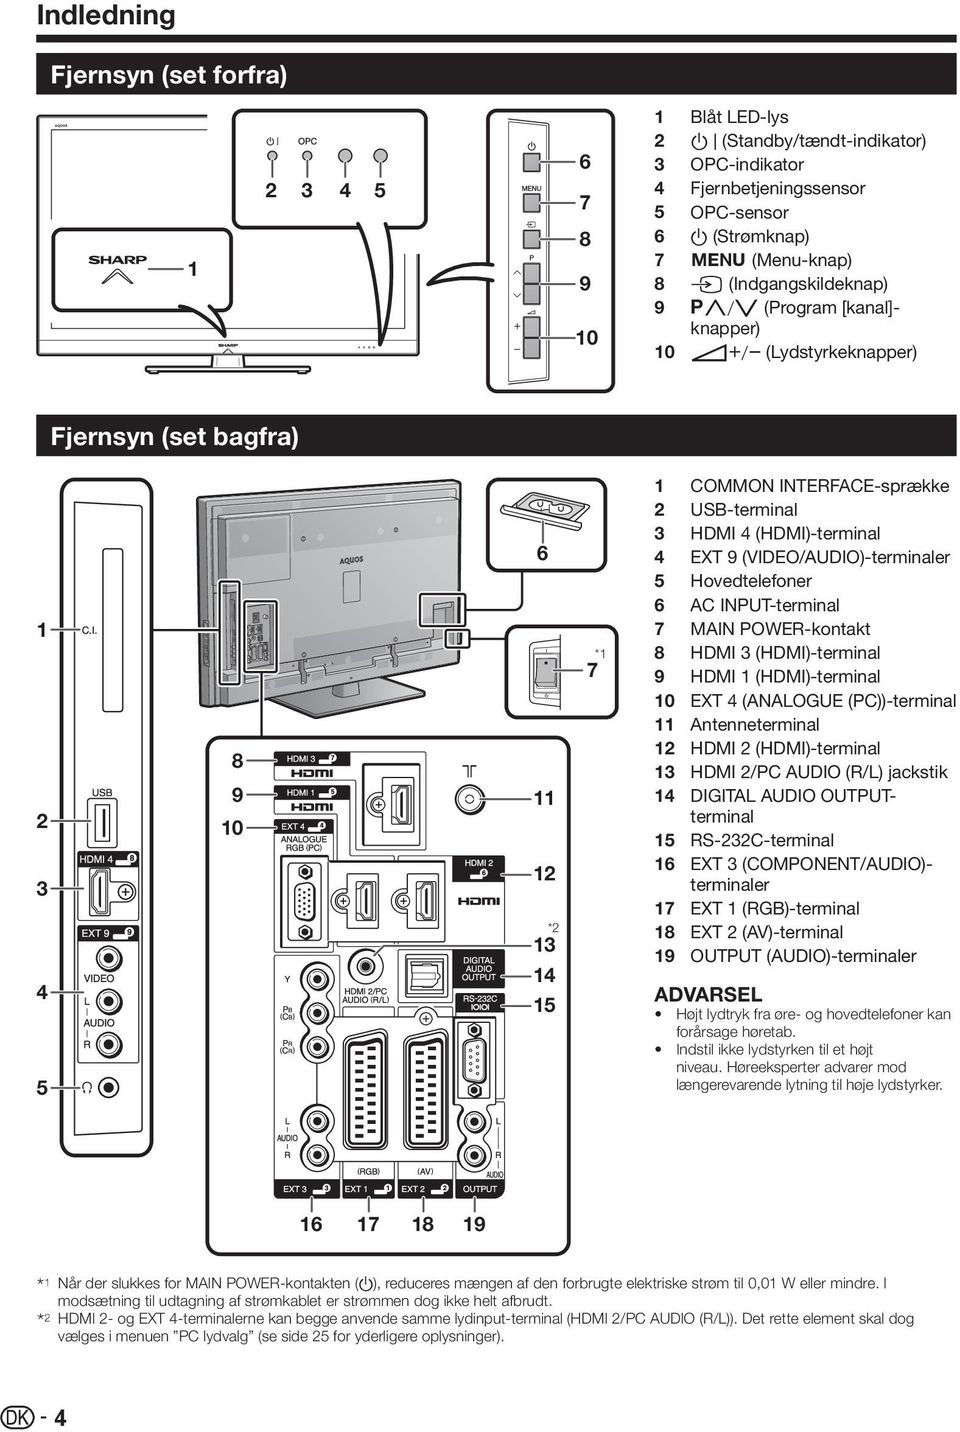 INTERFACE-sprække USB-terminal HDMI 4 (HDMI)-terminal EXT 9 (VIDEO/AUDIO)-terminaler Hovedtelefoner AC INPUT-terminal MAIN POWER-kontakt HDMI 3 (HDMI)-terminal HDMI 1 (HDMI)-terminal EXT 4 (ANALOGUE